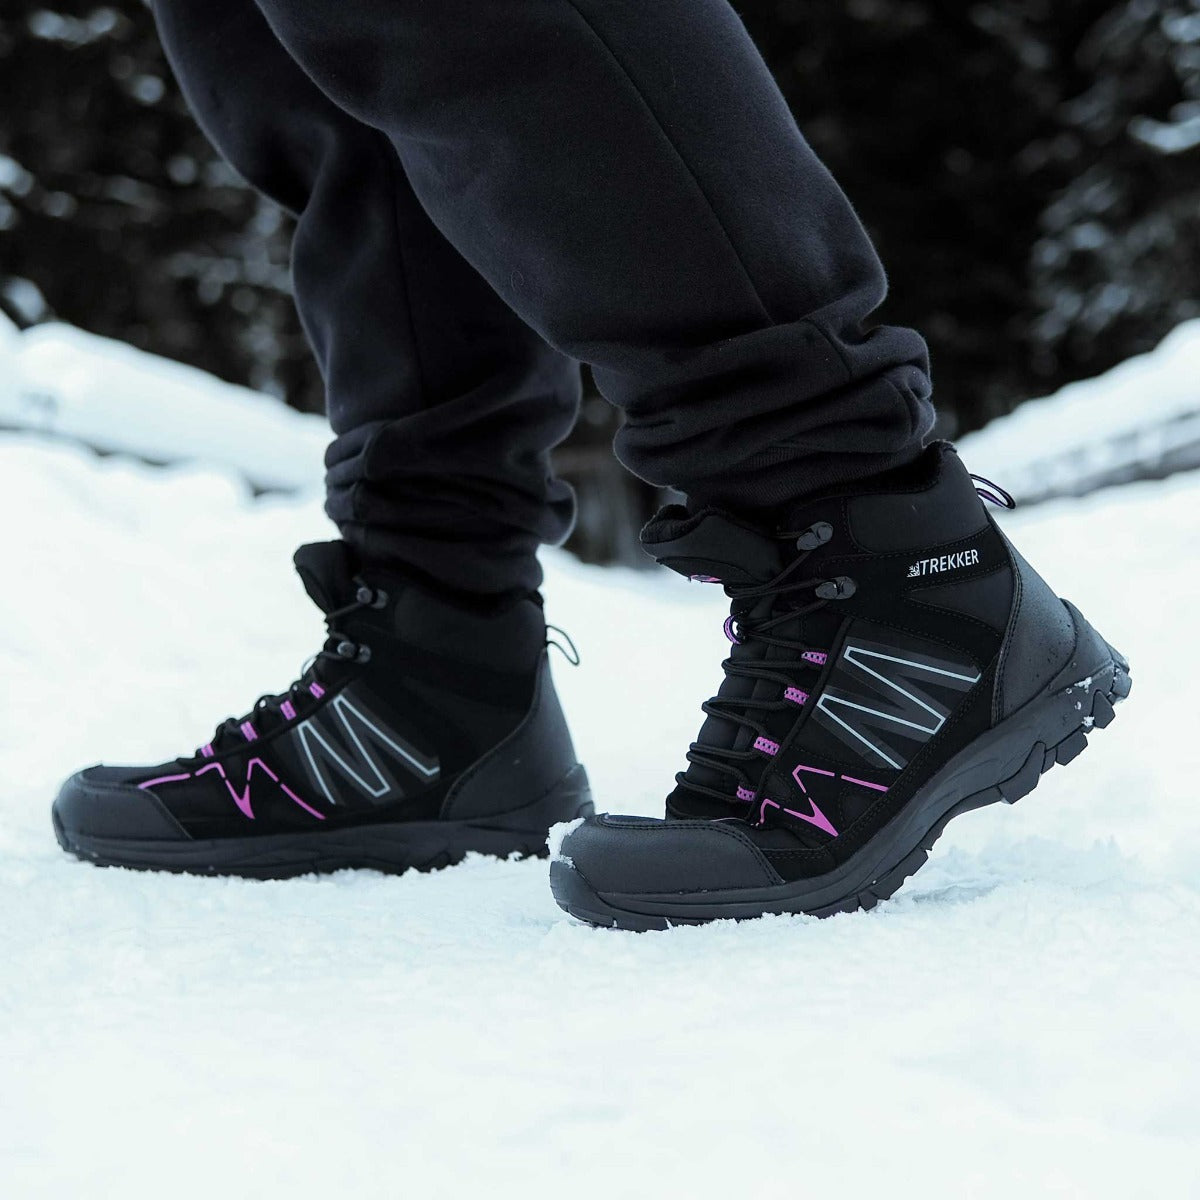 Trekker Scarpe invernali, chiodate - Rosa - 79,90 EUR - Nordic ProStore